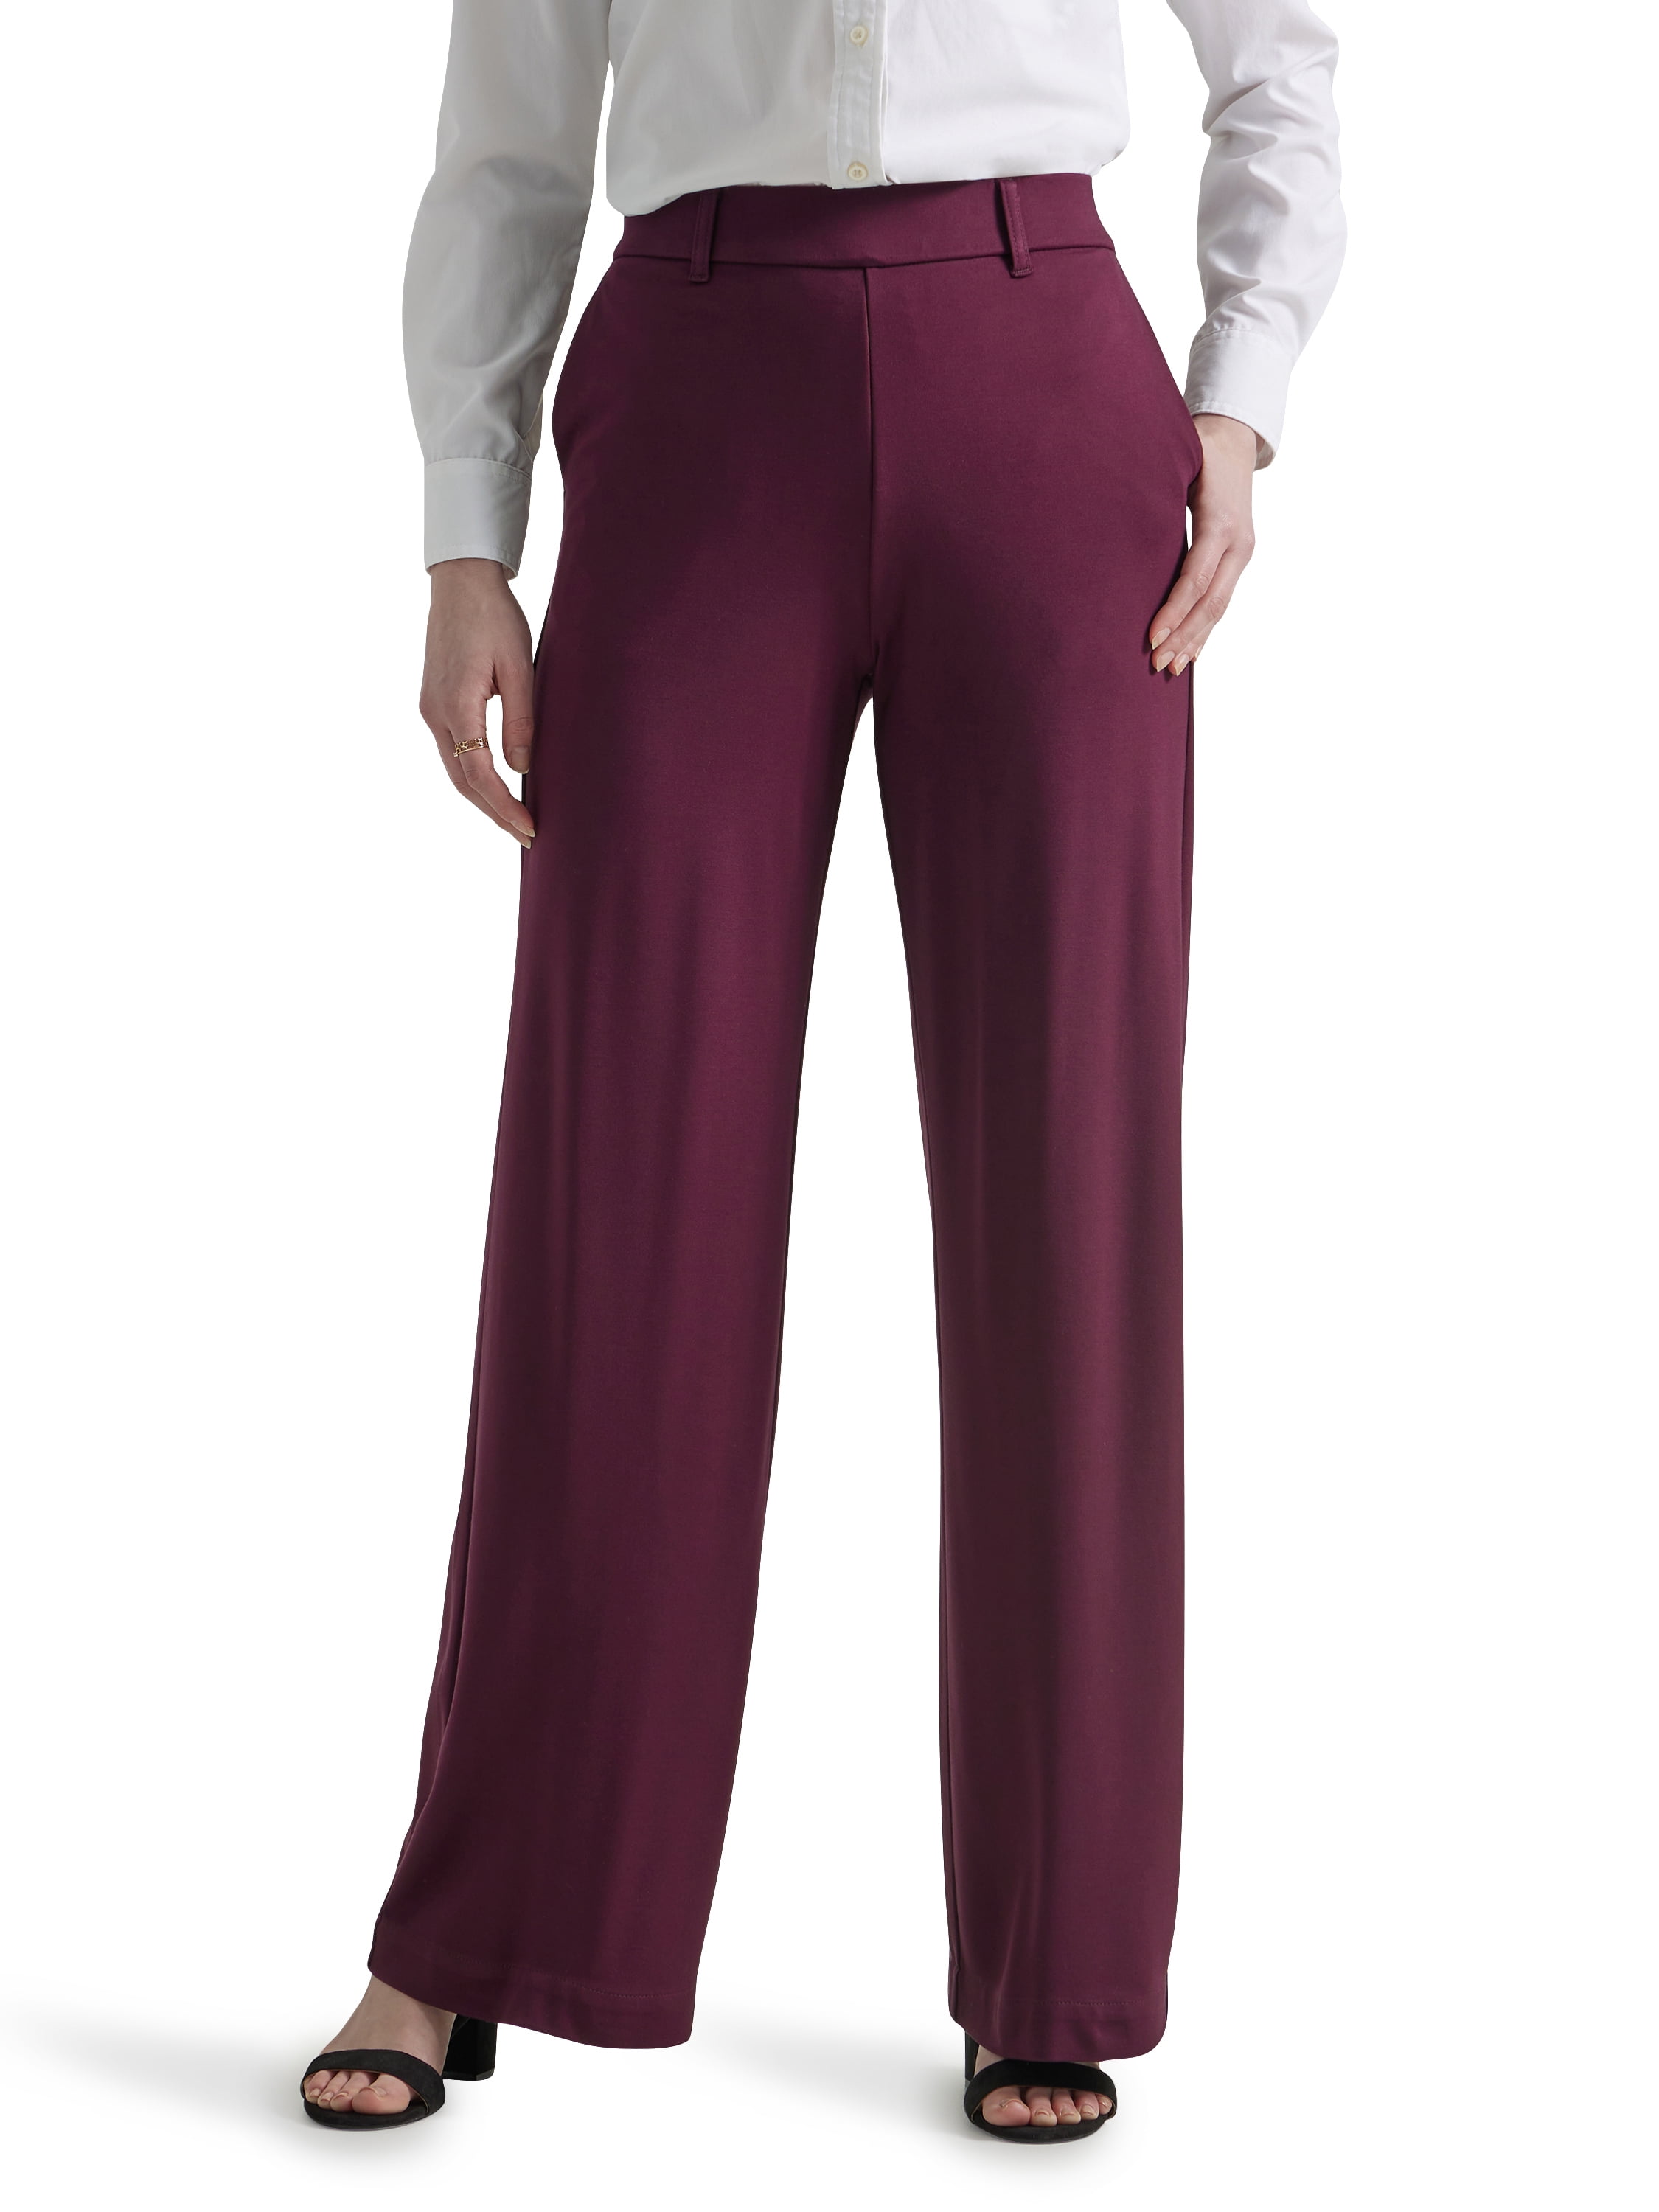 Lee® Women's Regular Fit Comfort Waist Straight Knit Pant